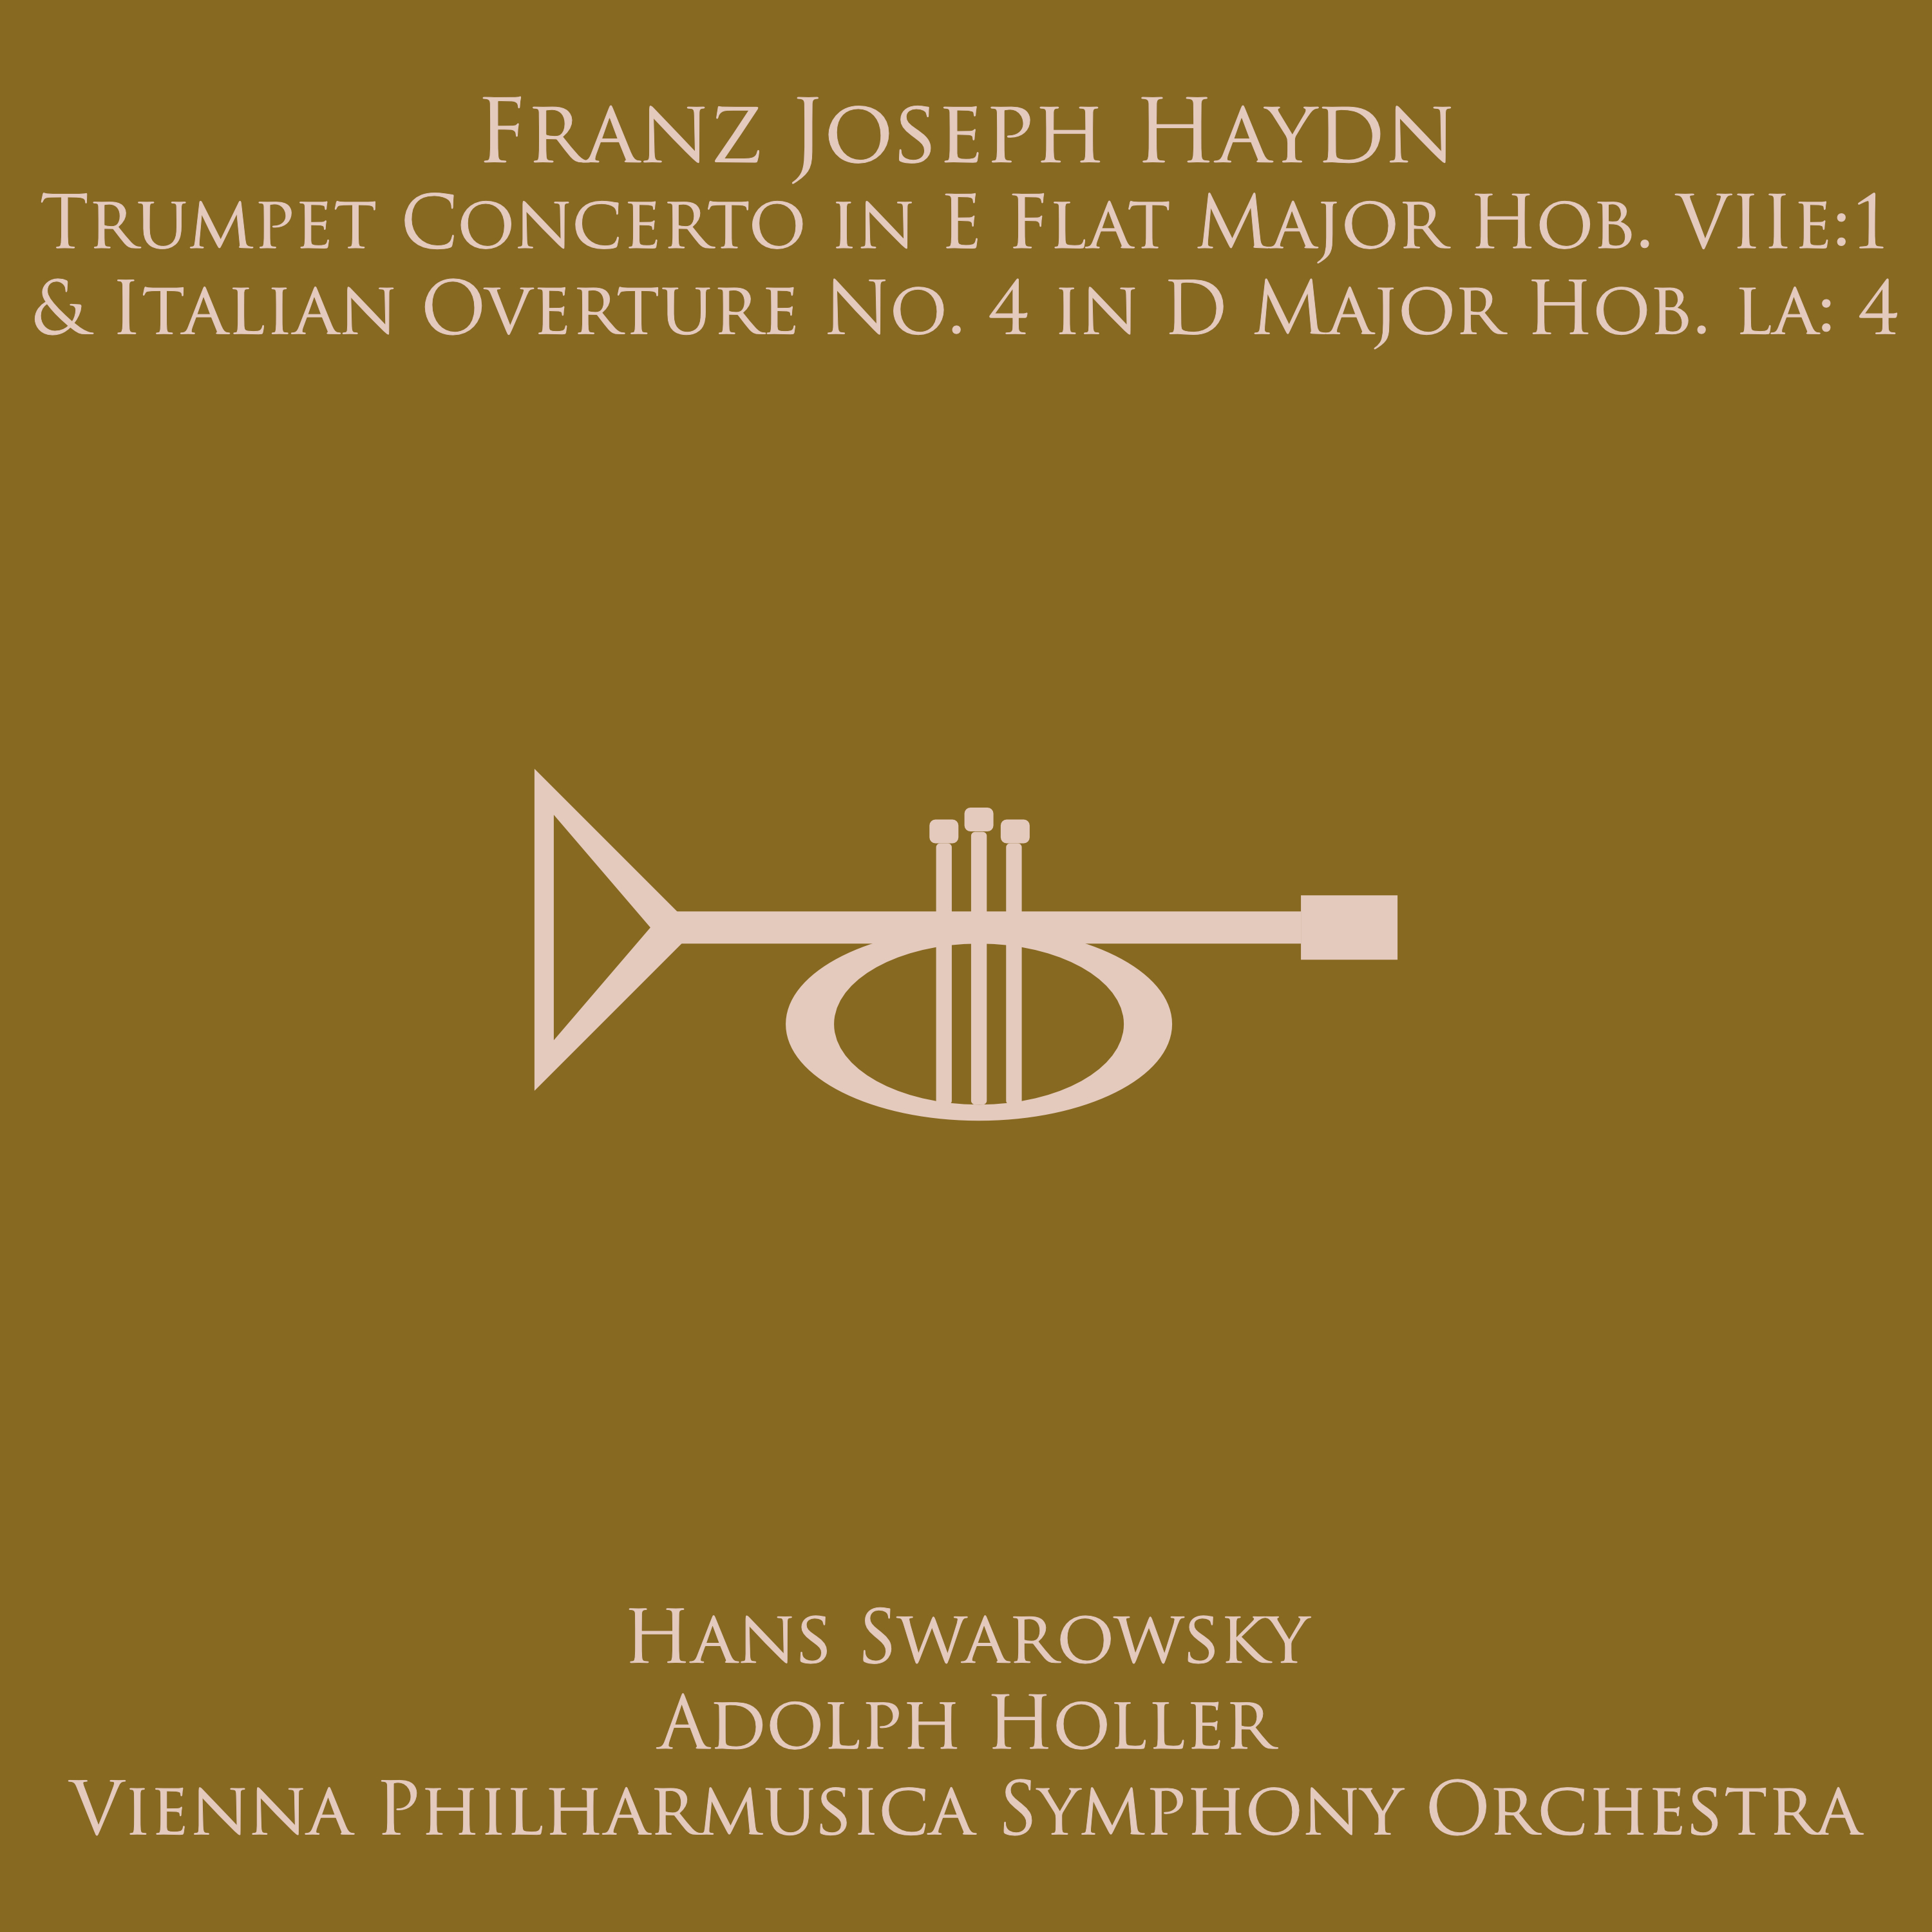 Trumpet Concerto in E Flat Major, Hob. VIIe:1: I. Allegro